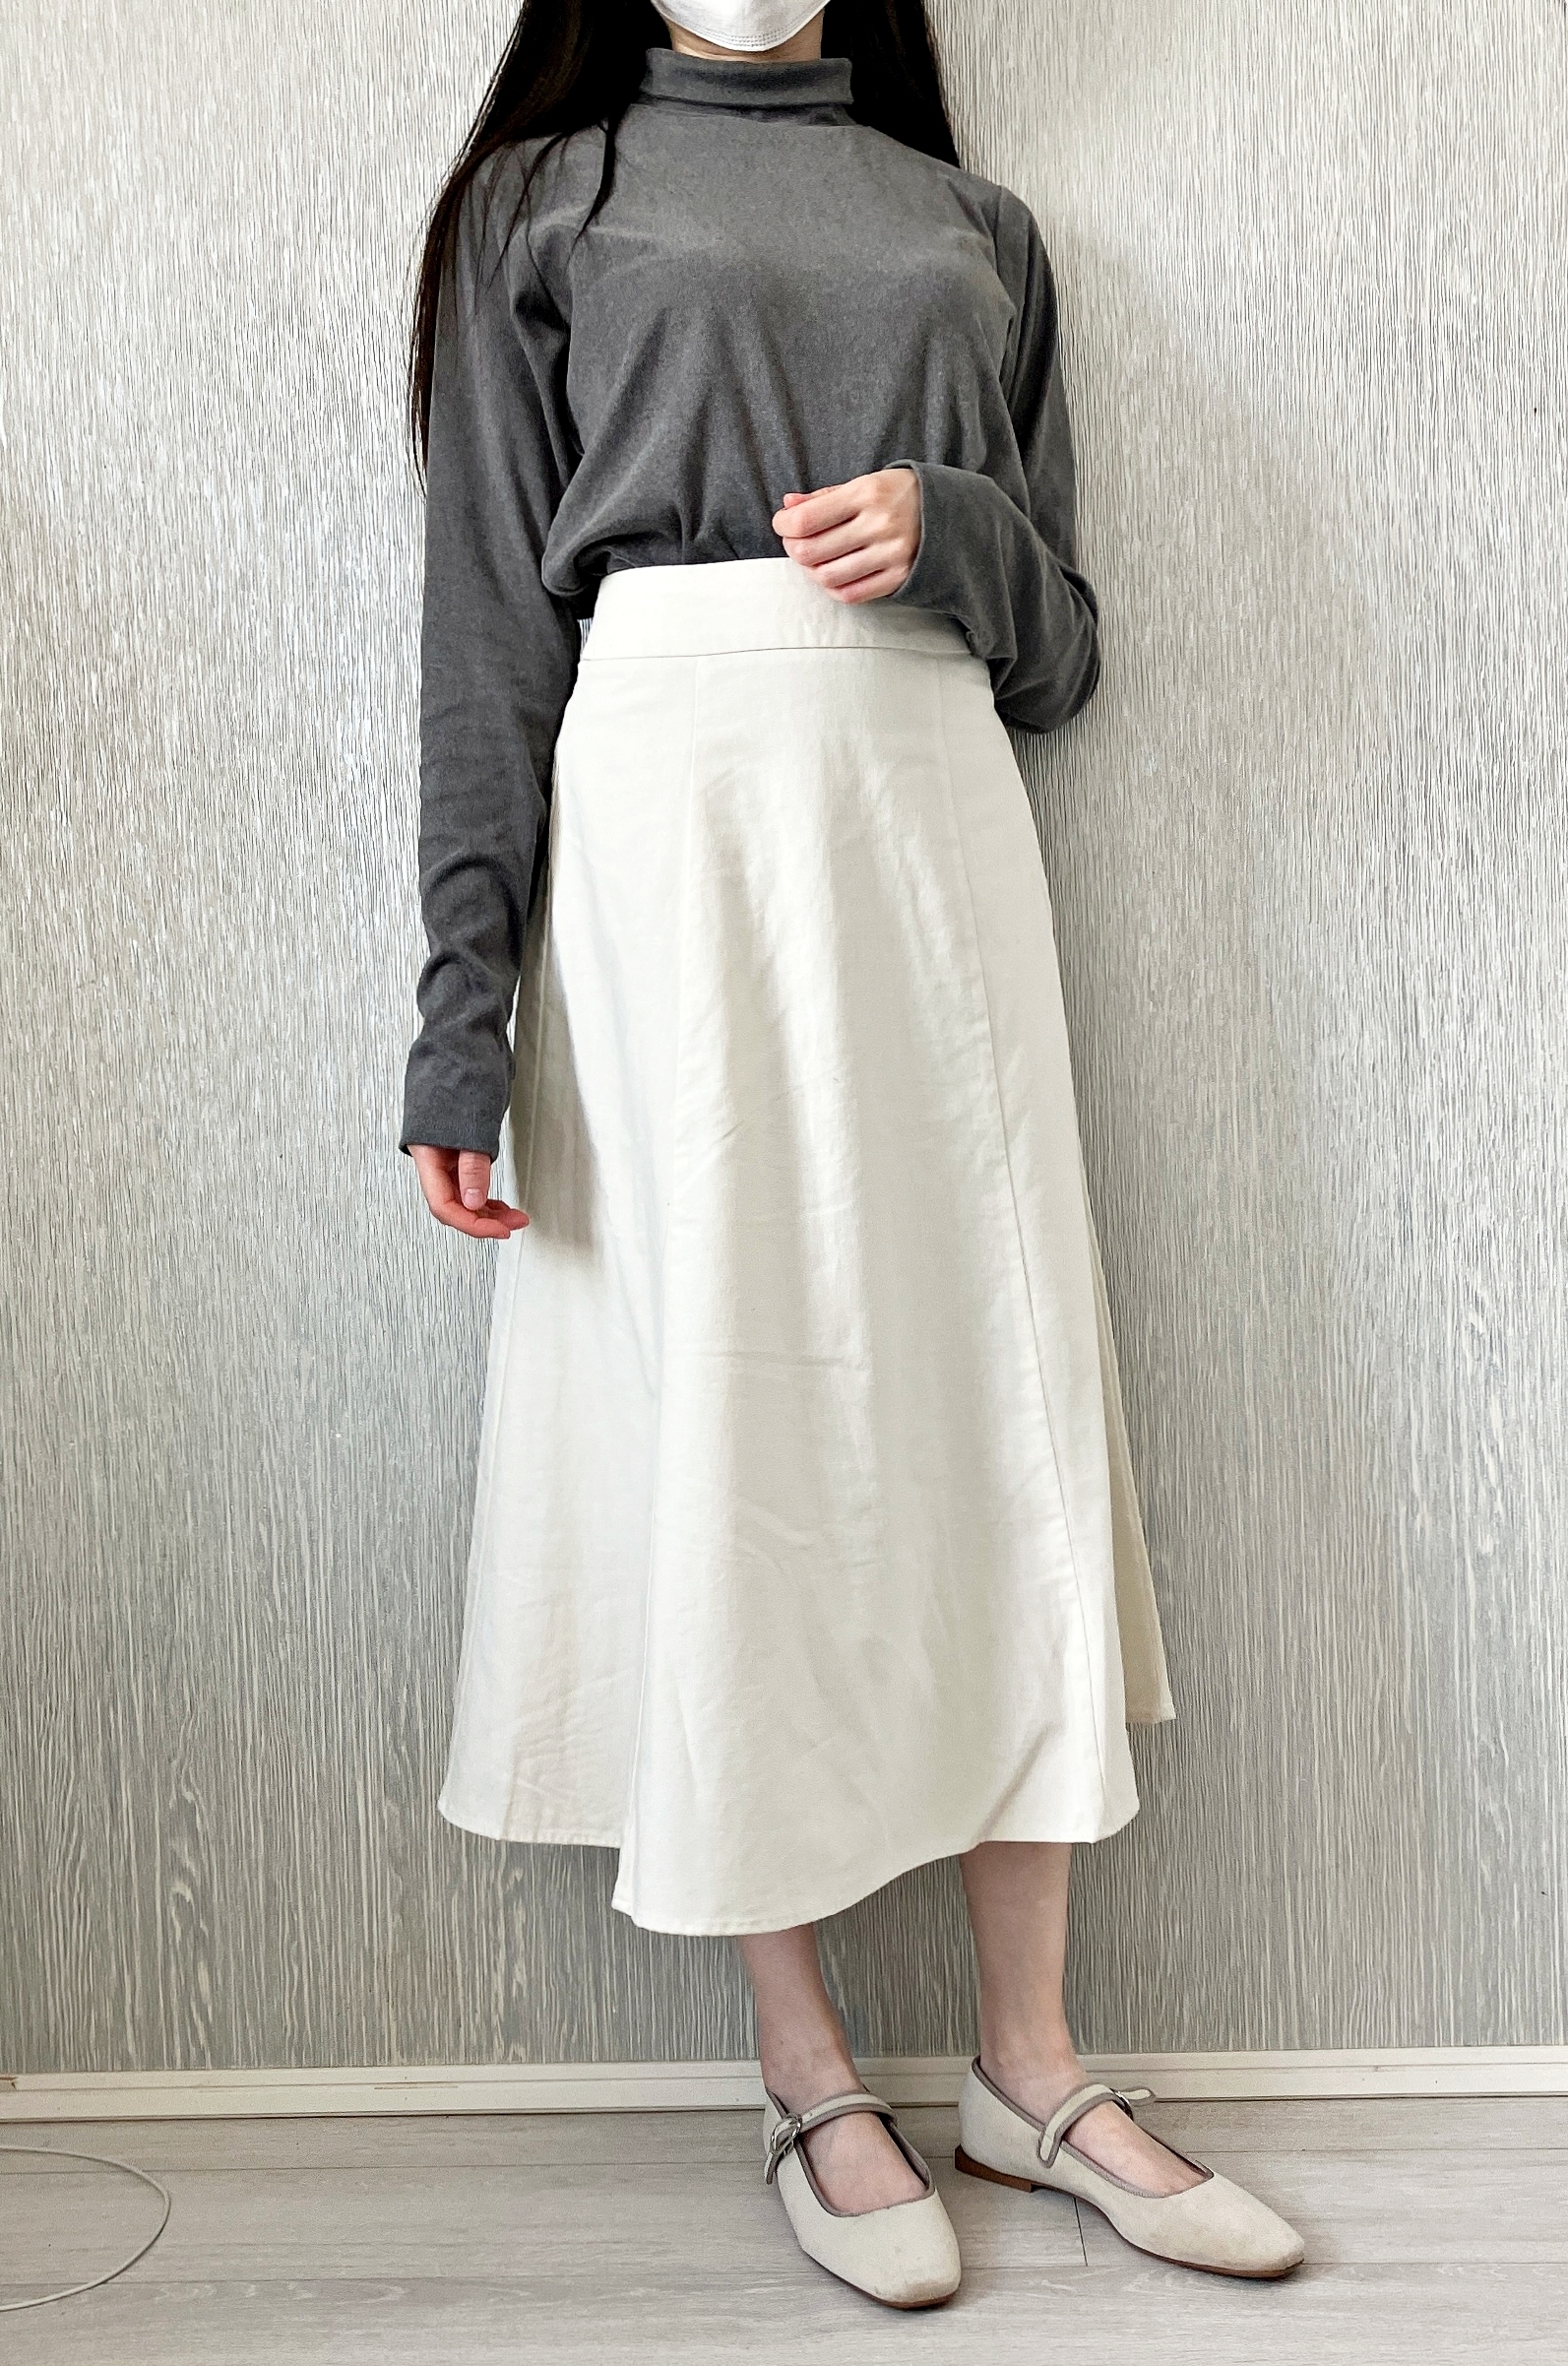 GU（ジーユー）のおすすめスカート「リネンブレンドフレアミディスカート+EC（丈短め78.0-82.0cm）」